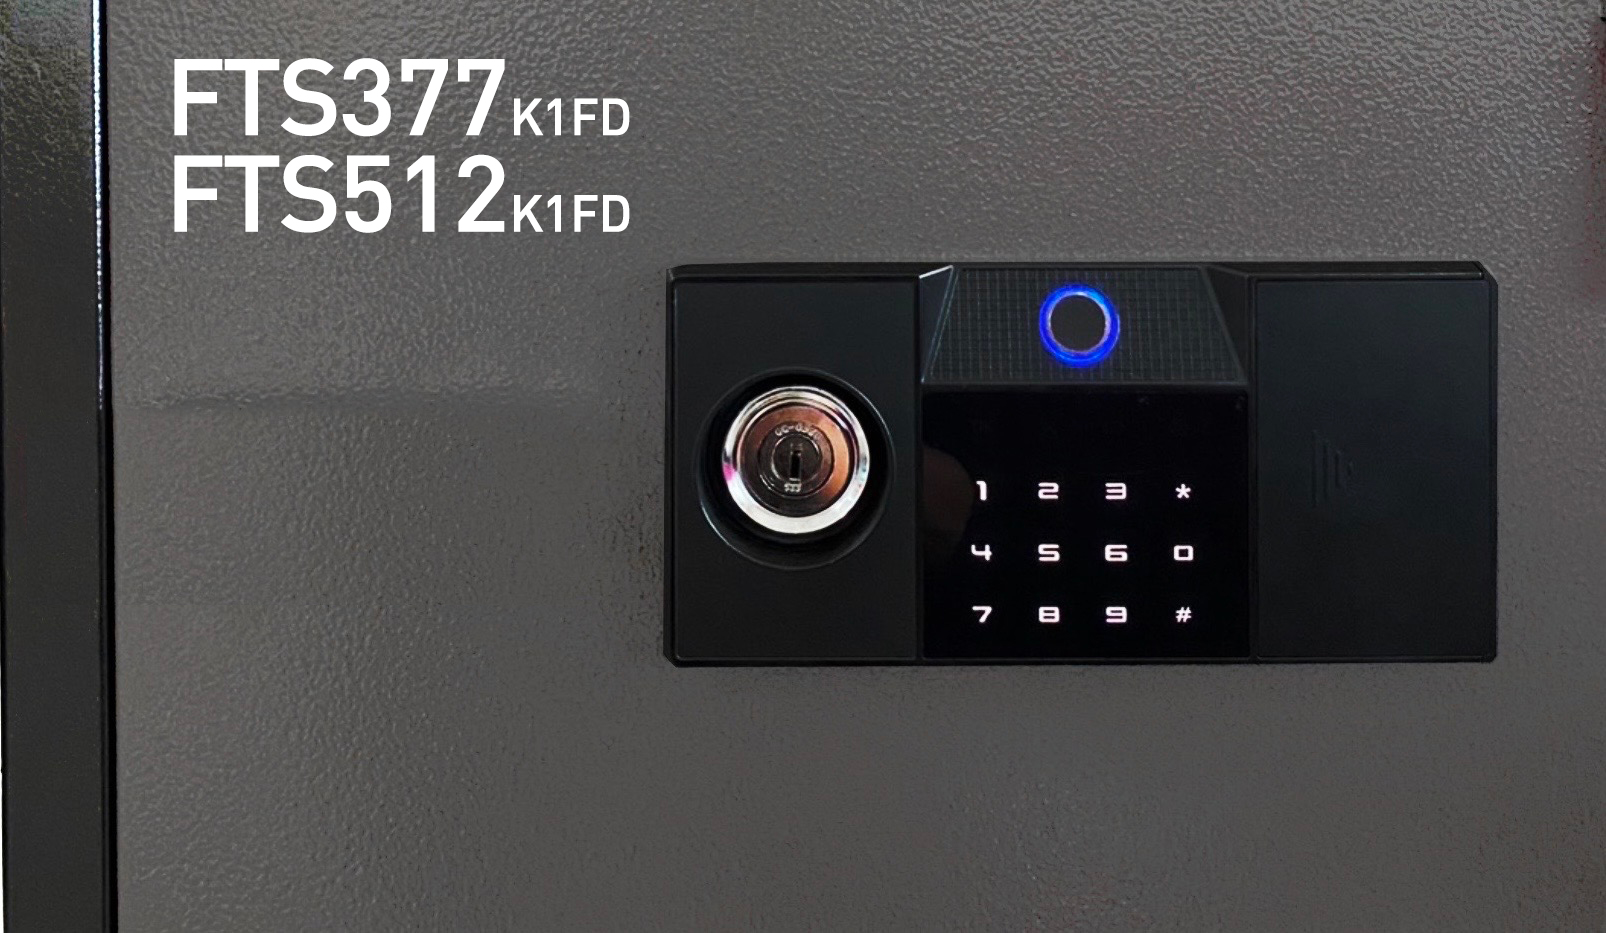 721553074::FTS377K1FD::ตู้เซฟสแกนนิ้วมือ กล่องถ่านอยู่ภายนอก มอก. ตู้นิรภัยชนิดกันไฟ น้ำหนัก 51 KG. เปิด-ปิดด้วยกุญแจ1ดอกพร้อมกัน กดปุ่มดิจิตอล ป้องกันการปลอมแปลงกุญแจ ขนาดภายในตู้เซฟ ก480xล400xส377 มม. ขนาดภายนอกตู้เซฟ ก348xล272xส212 มม. สีRBW,สีBKRB ไทโย ตู้เซฟ